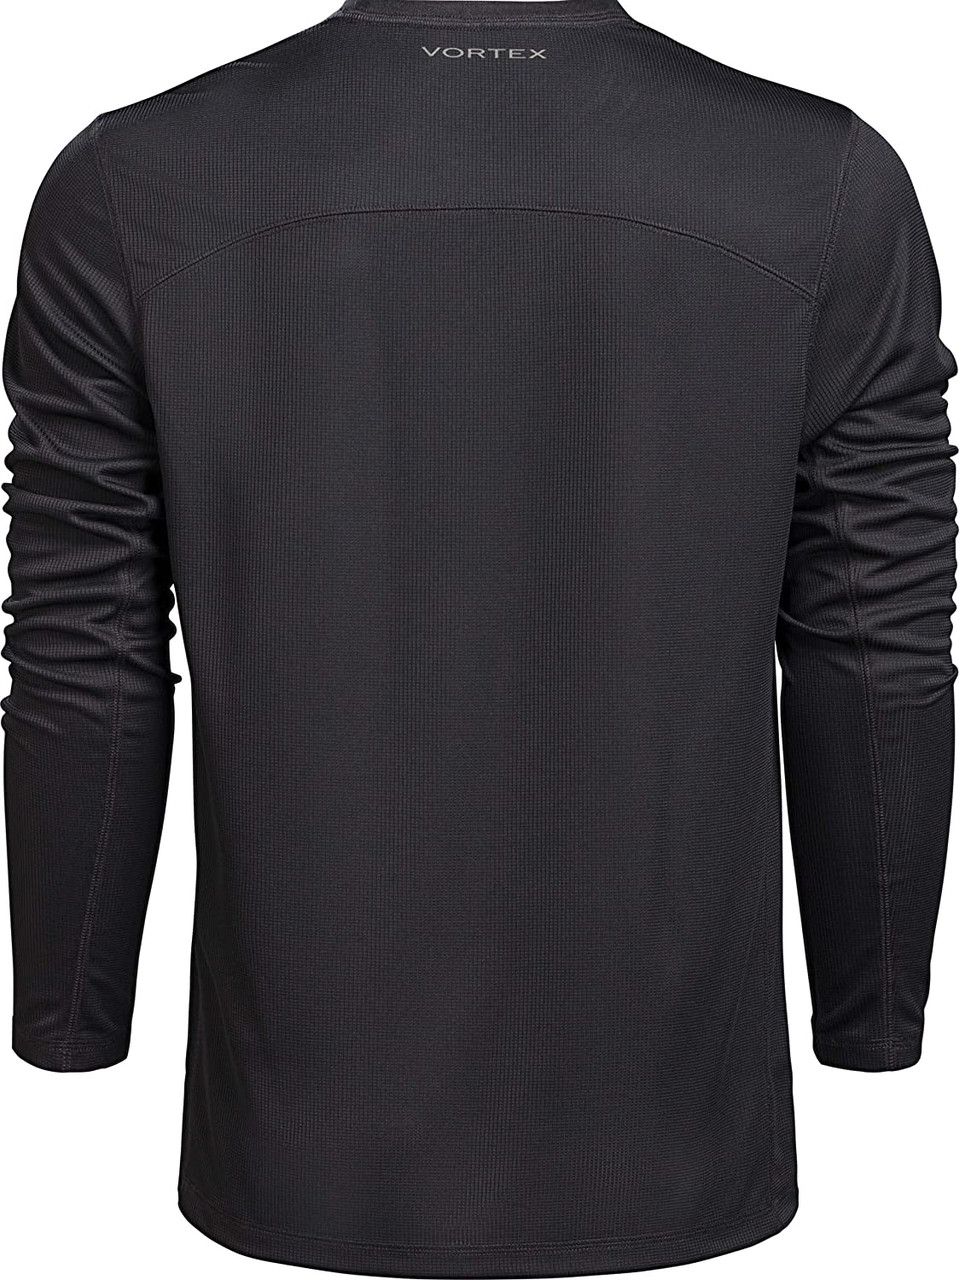 Vortex Optics Core Logo Performance Grid Shirts - Black - XX-Large